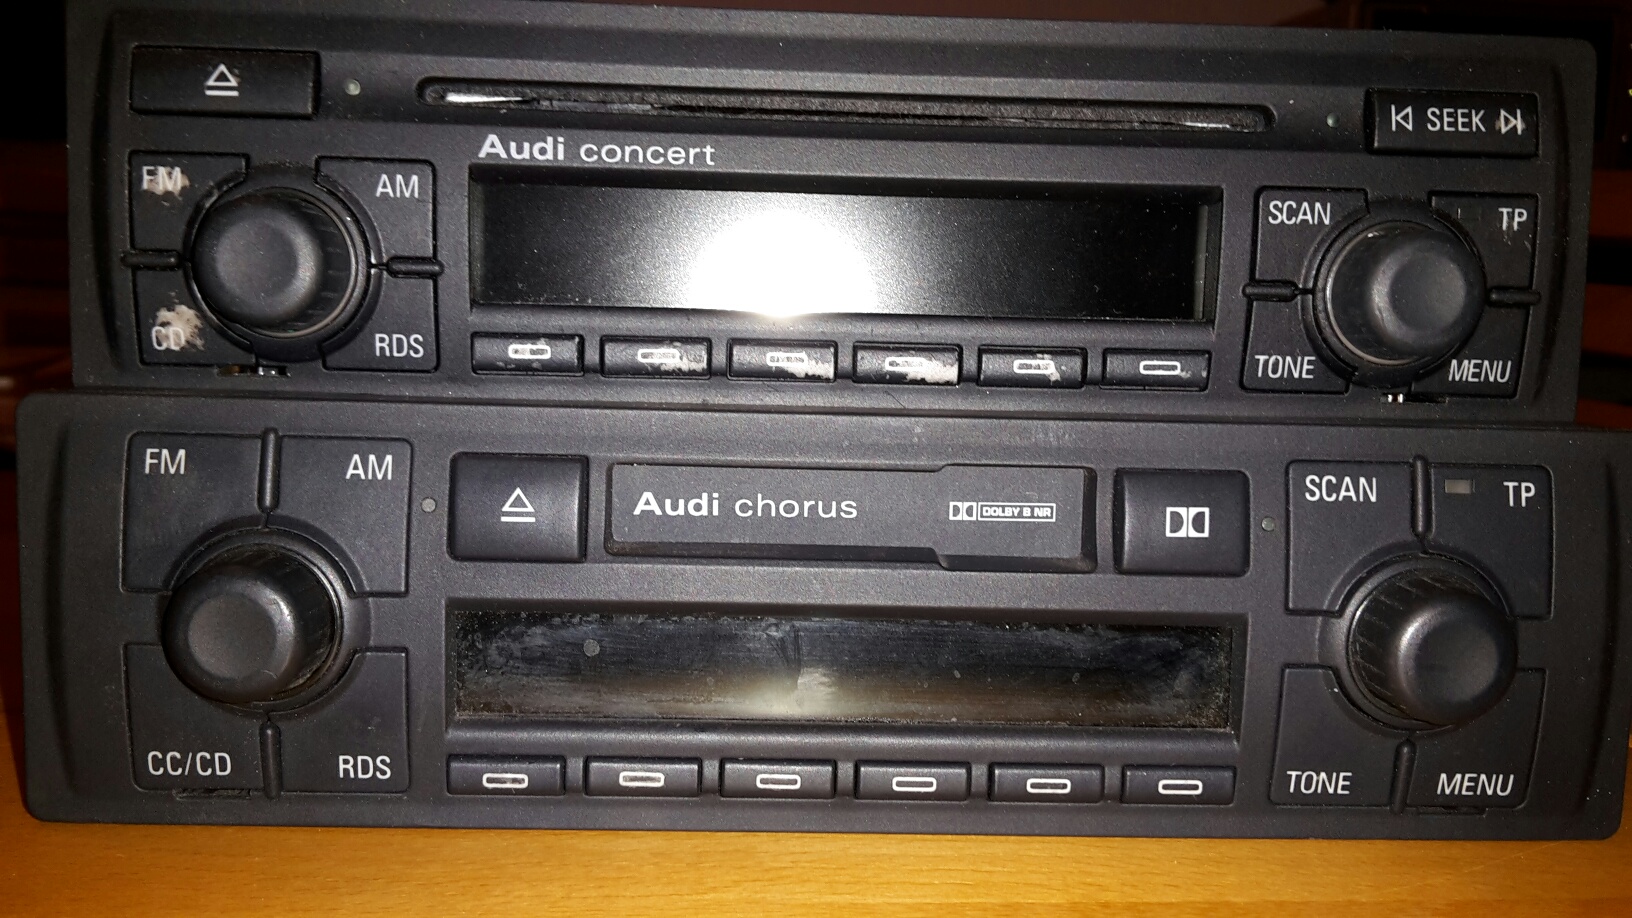 Originalradio Audi Concert 2 bringt keinen Ton raus - HIFI - Handy - NAVI -  Audi A2 Club Deutschland